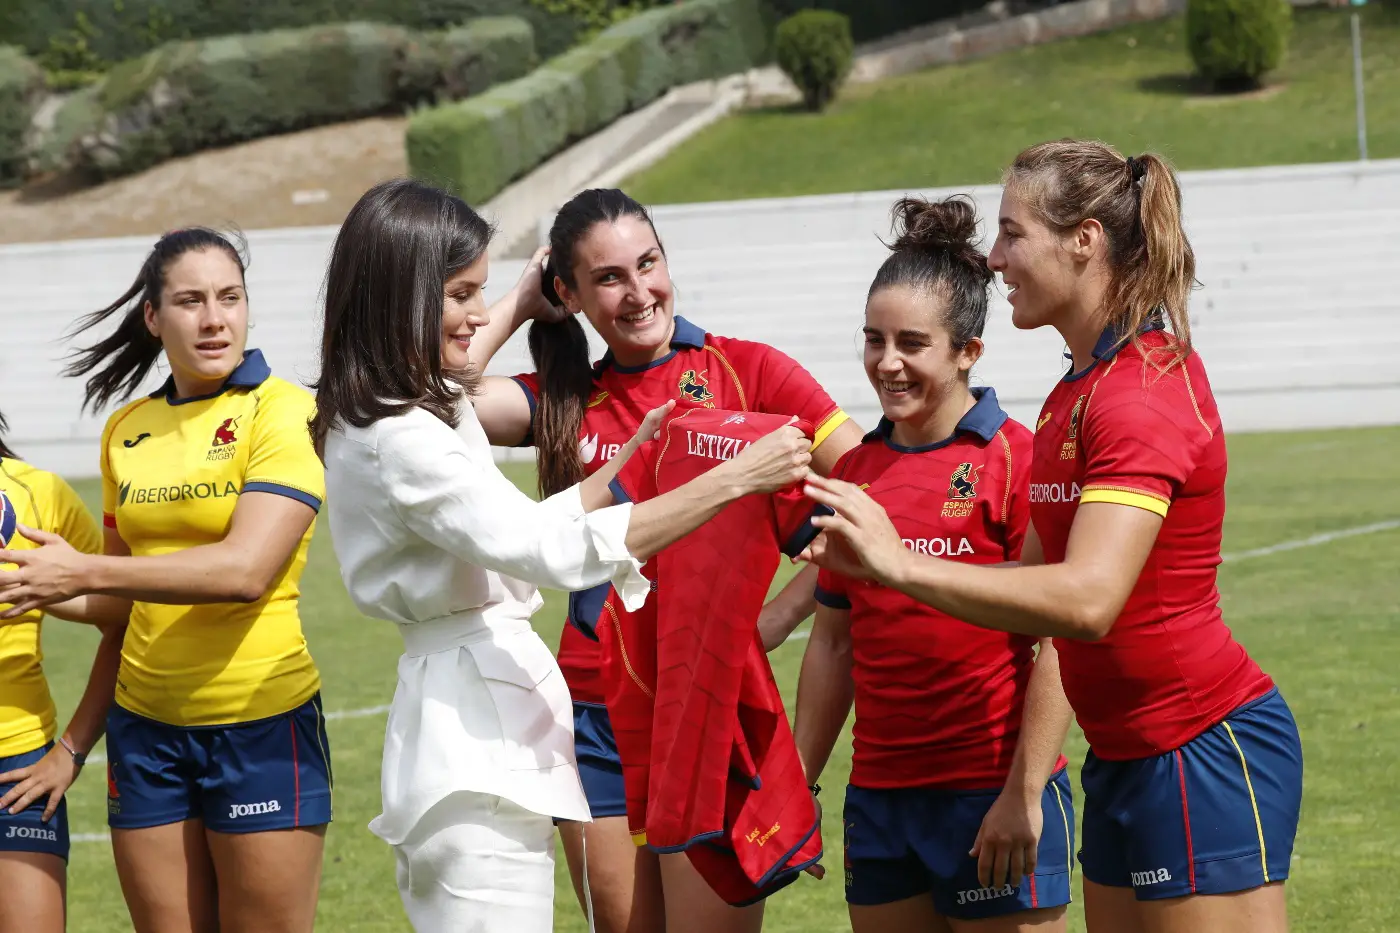 Queen letizia in white carolina herrera belted shirt for women rugby team trainin session